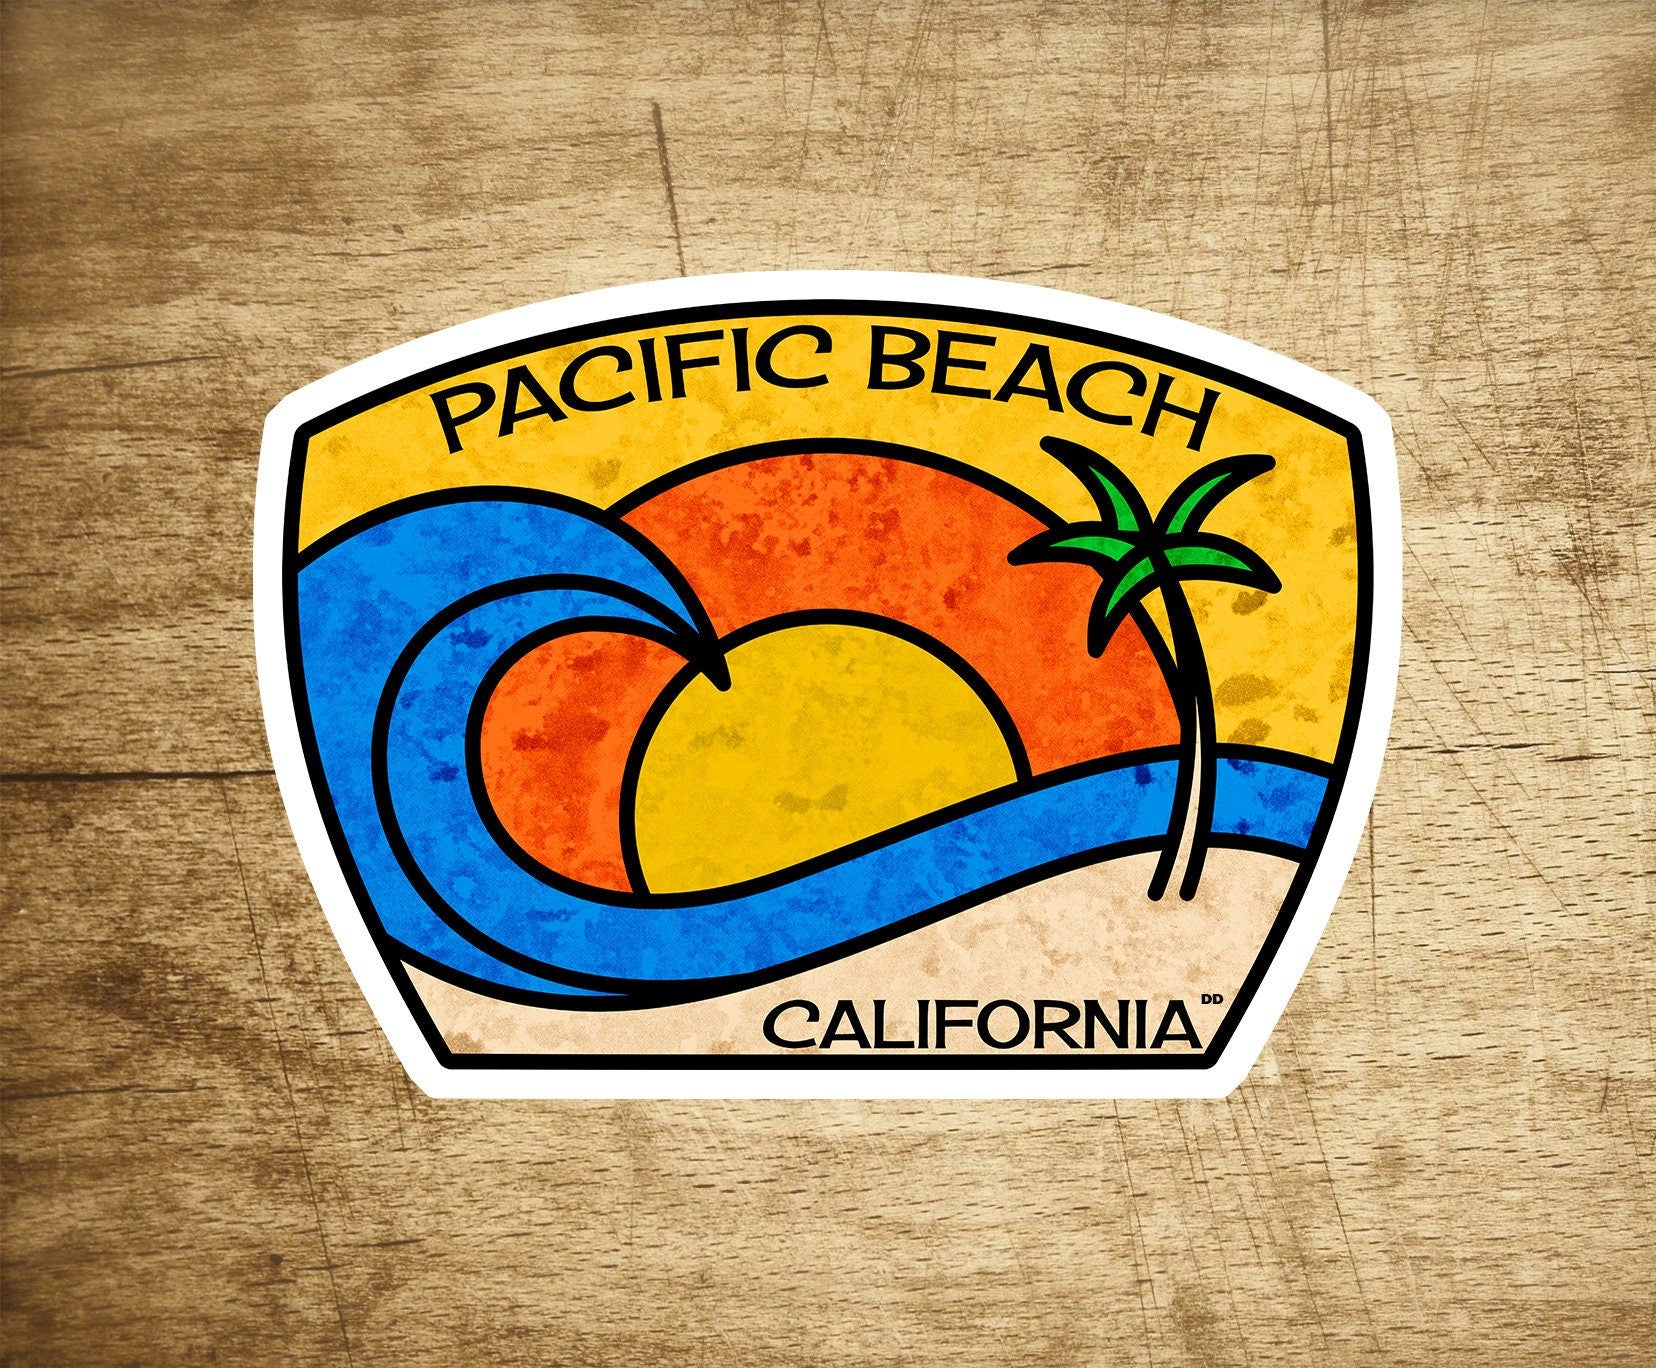 Pacific Beach California Decal Sticker 3.75" X 2.75" Surf San Diego Surfing